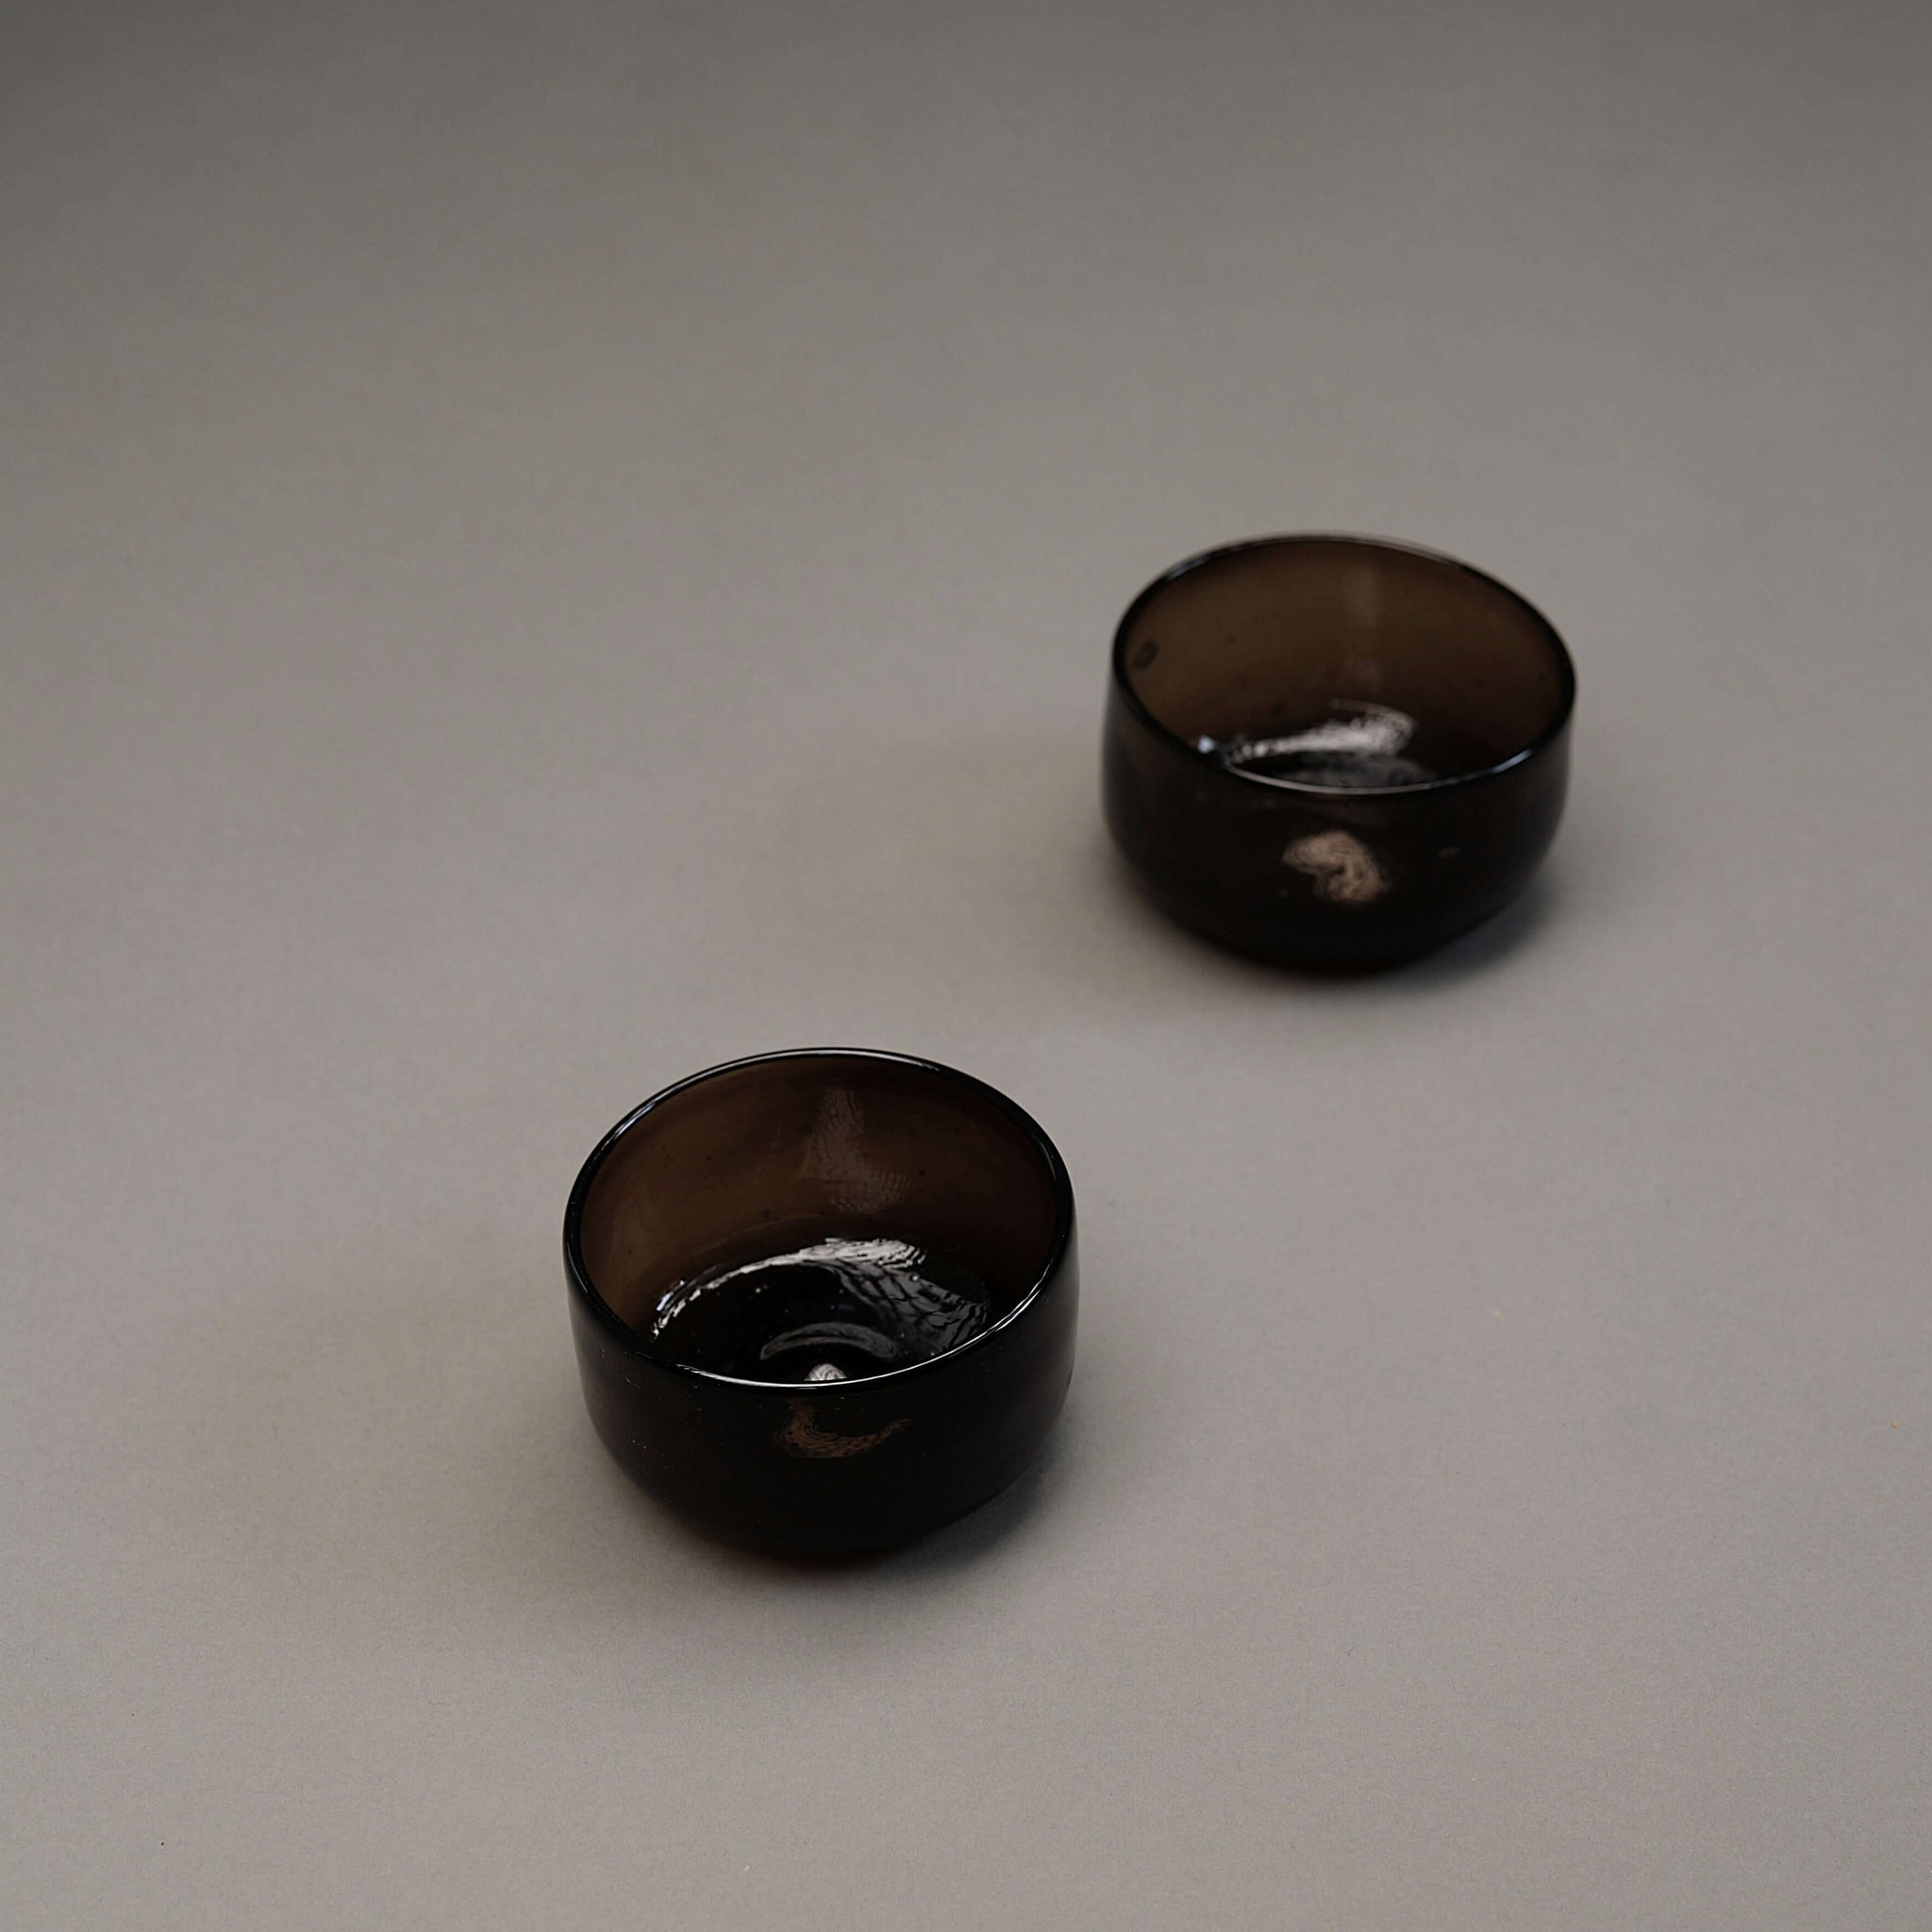 Small set of 2 smoky glass pinch bowls.